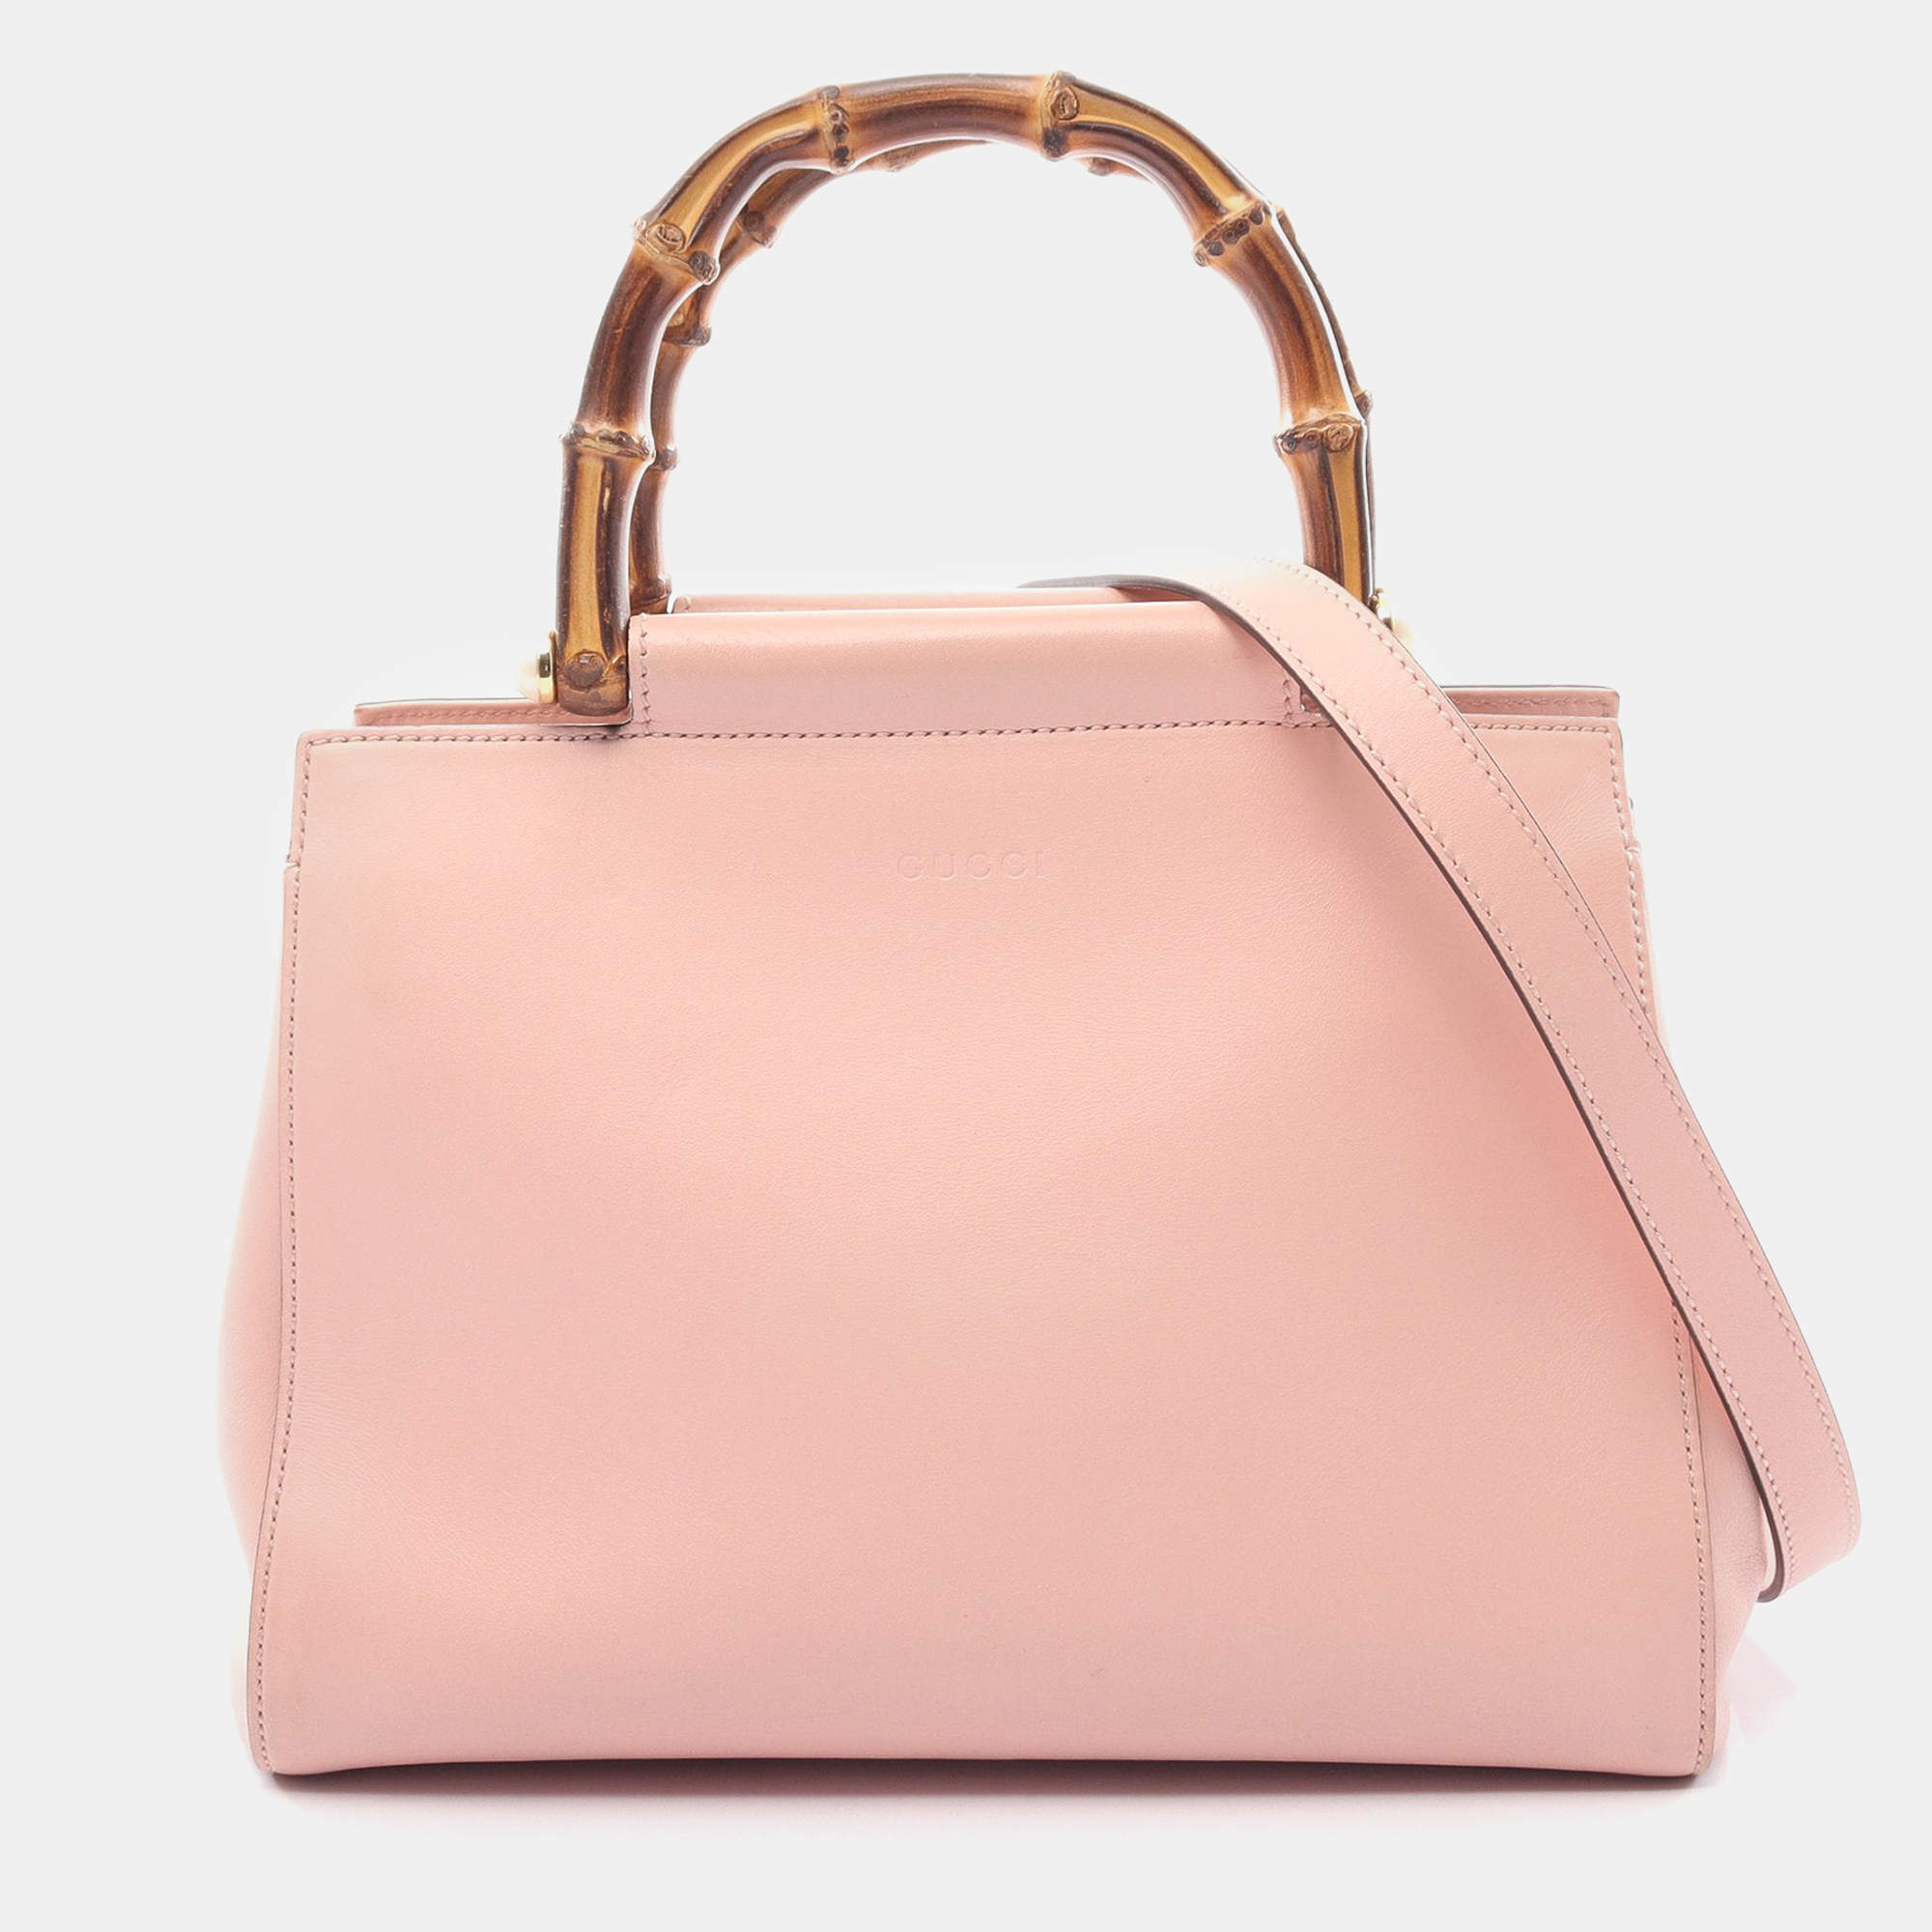 Gucci Nym Fair Bamboo Handbag Leather Light pink 2WAY